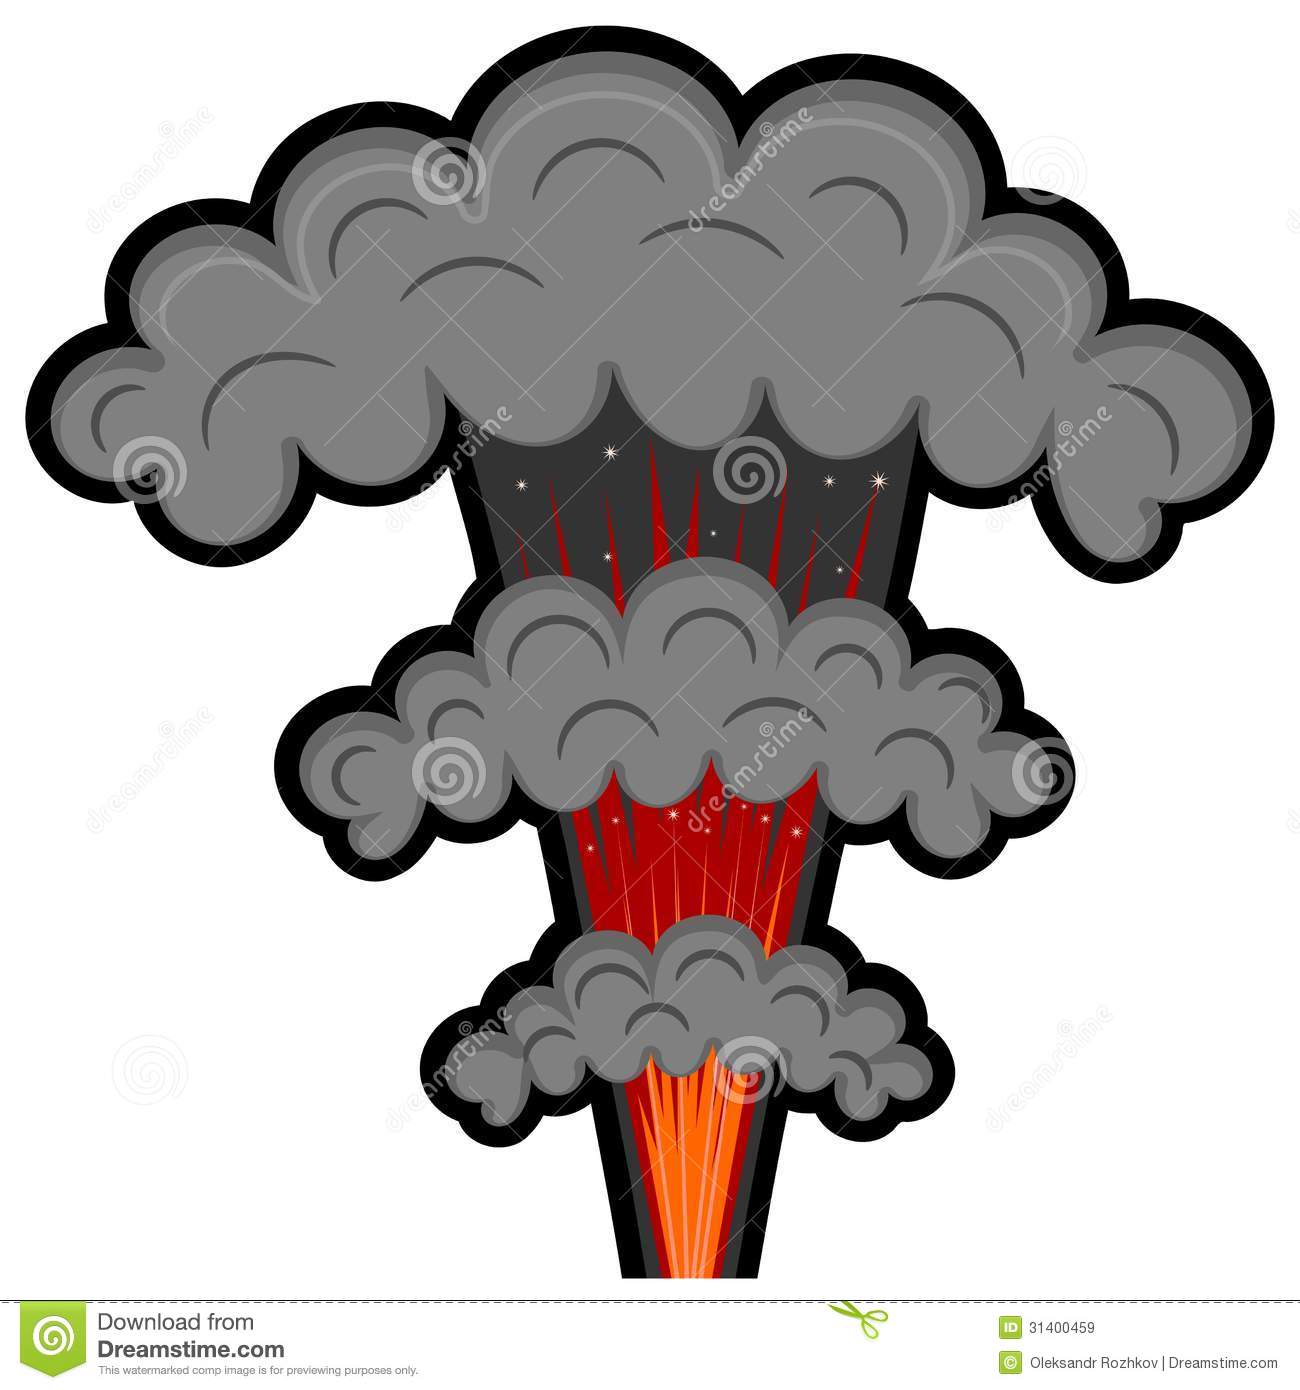 Cartoon Explosion  Eps10 Royalty Free Stock Images   Image  31400459